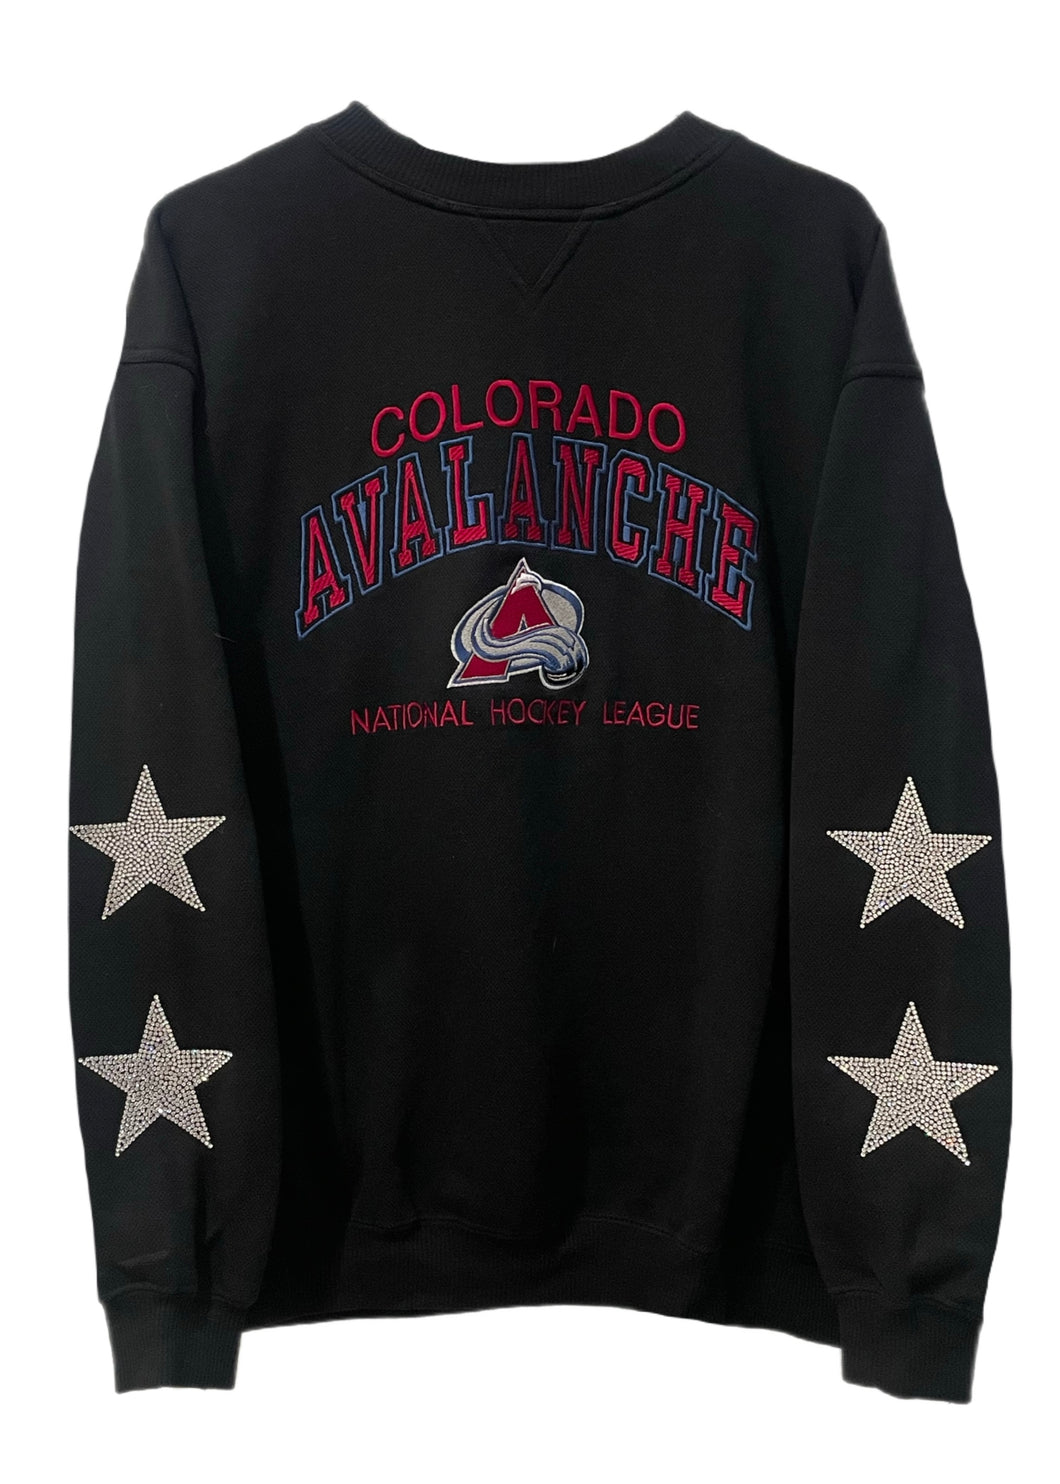 Denver Colorado Avalanche, Hockey One of a KIND Vintage Sweatshirt with Crystal Star Design